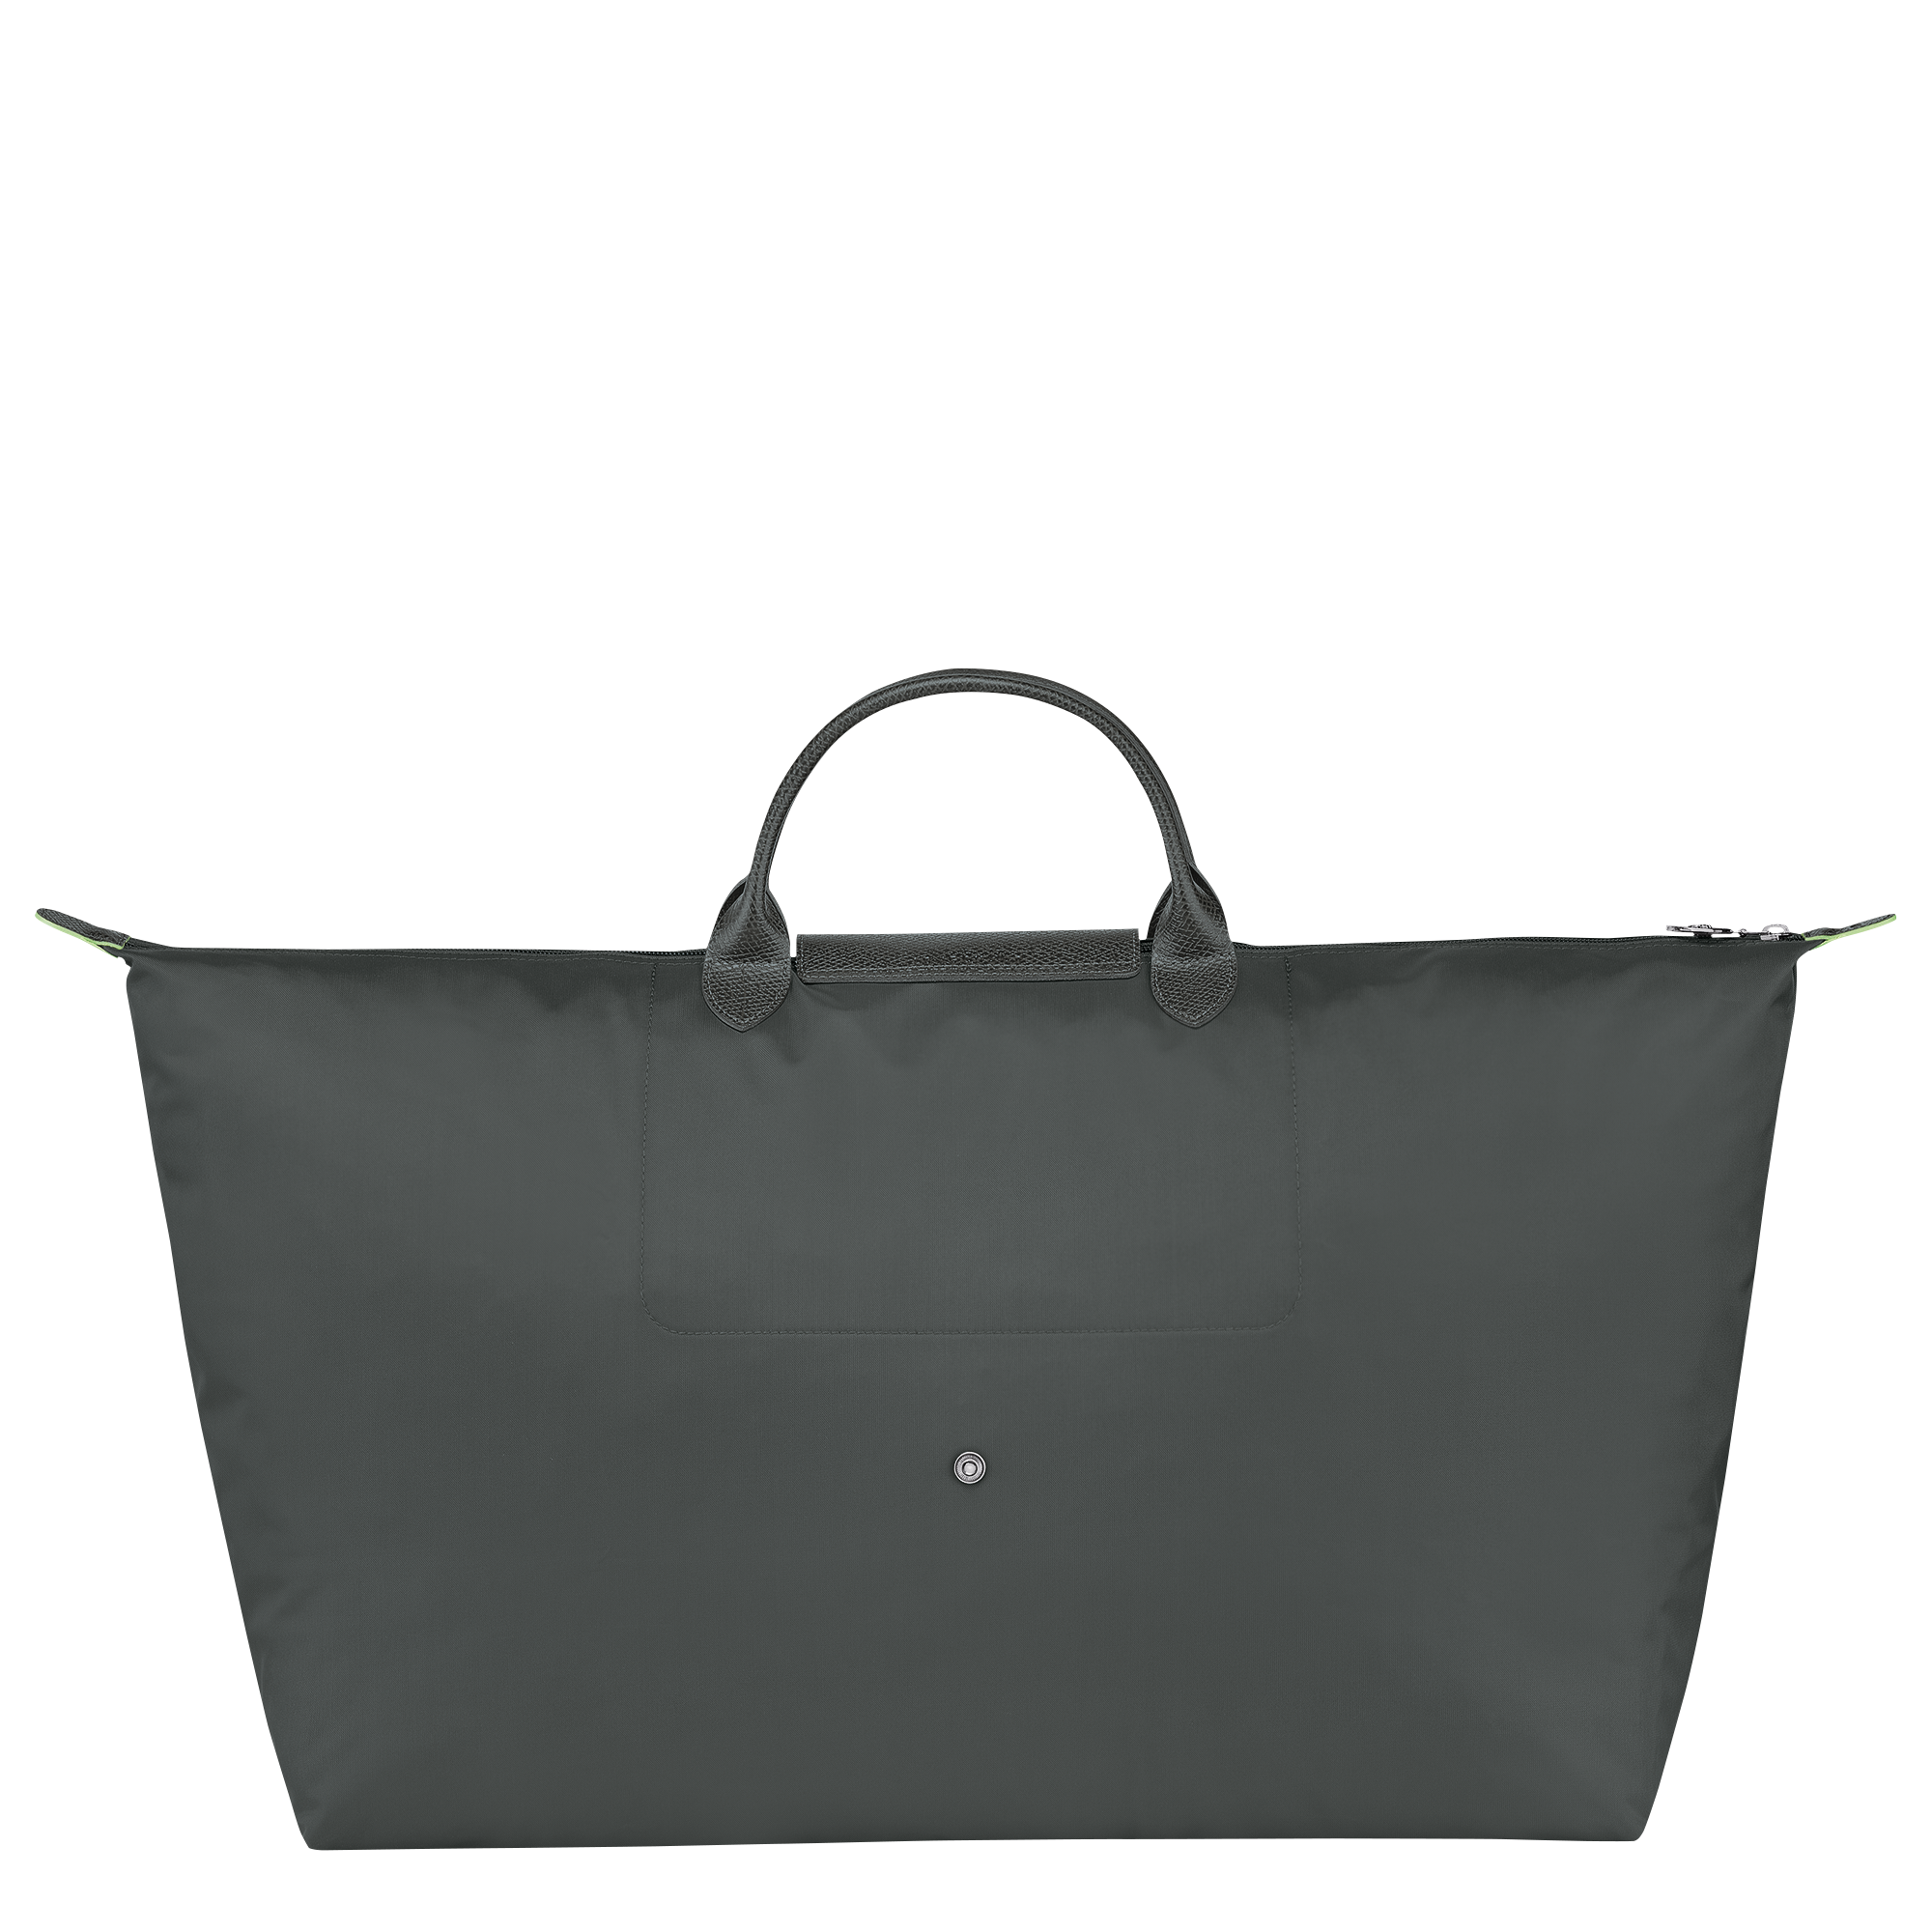 Le Pliage Green Travel bag M, Graphite